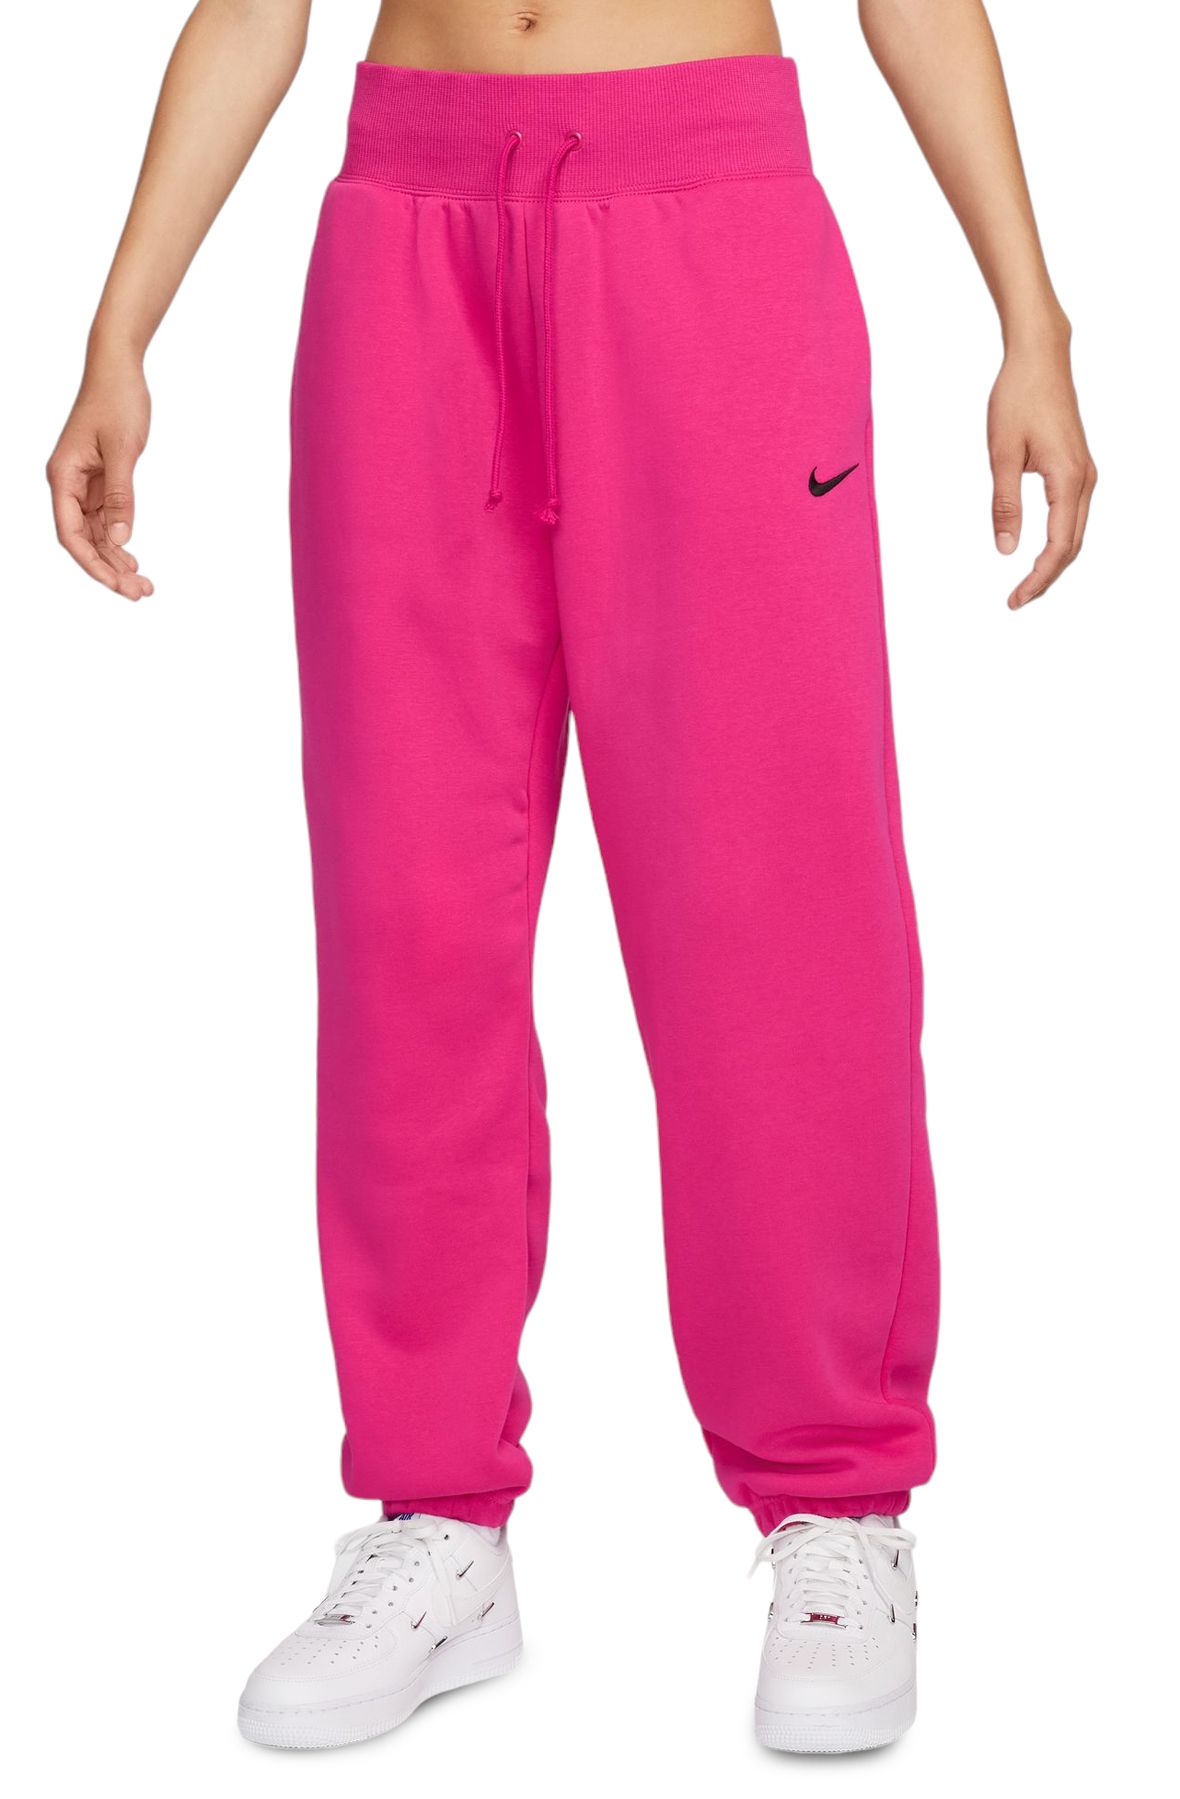 Women's oversized high-waisted jogging suit Nike Phoenix Fleece